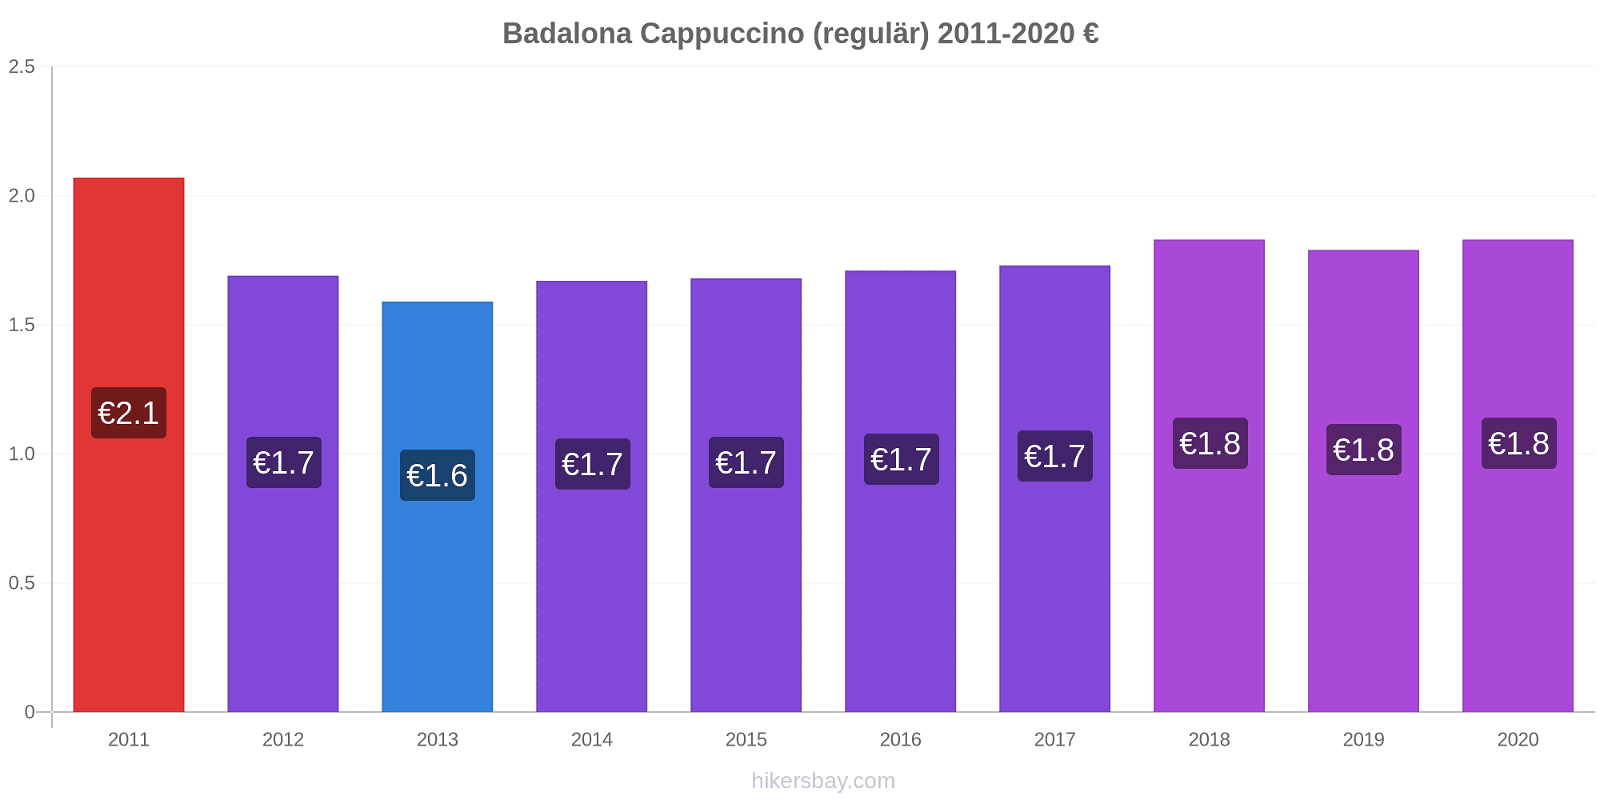 Badalona Preisänderungen Cappuccino (regulär) hikersbay.com